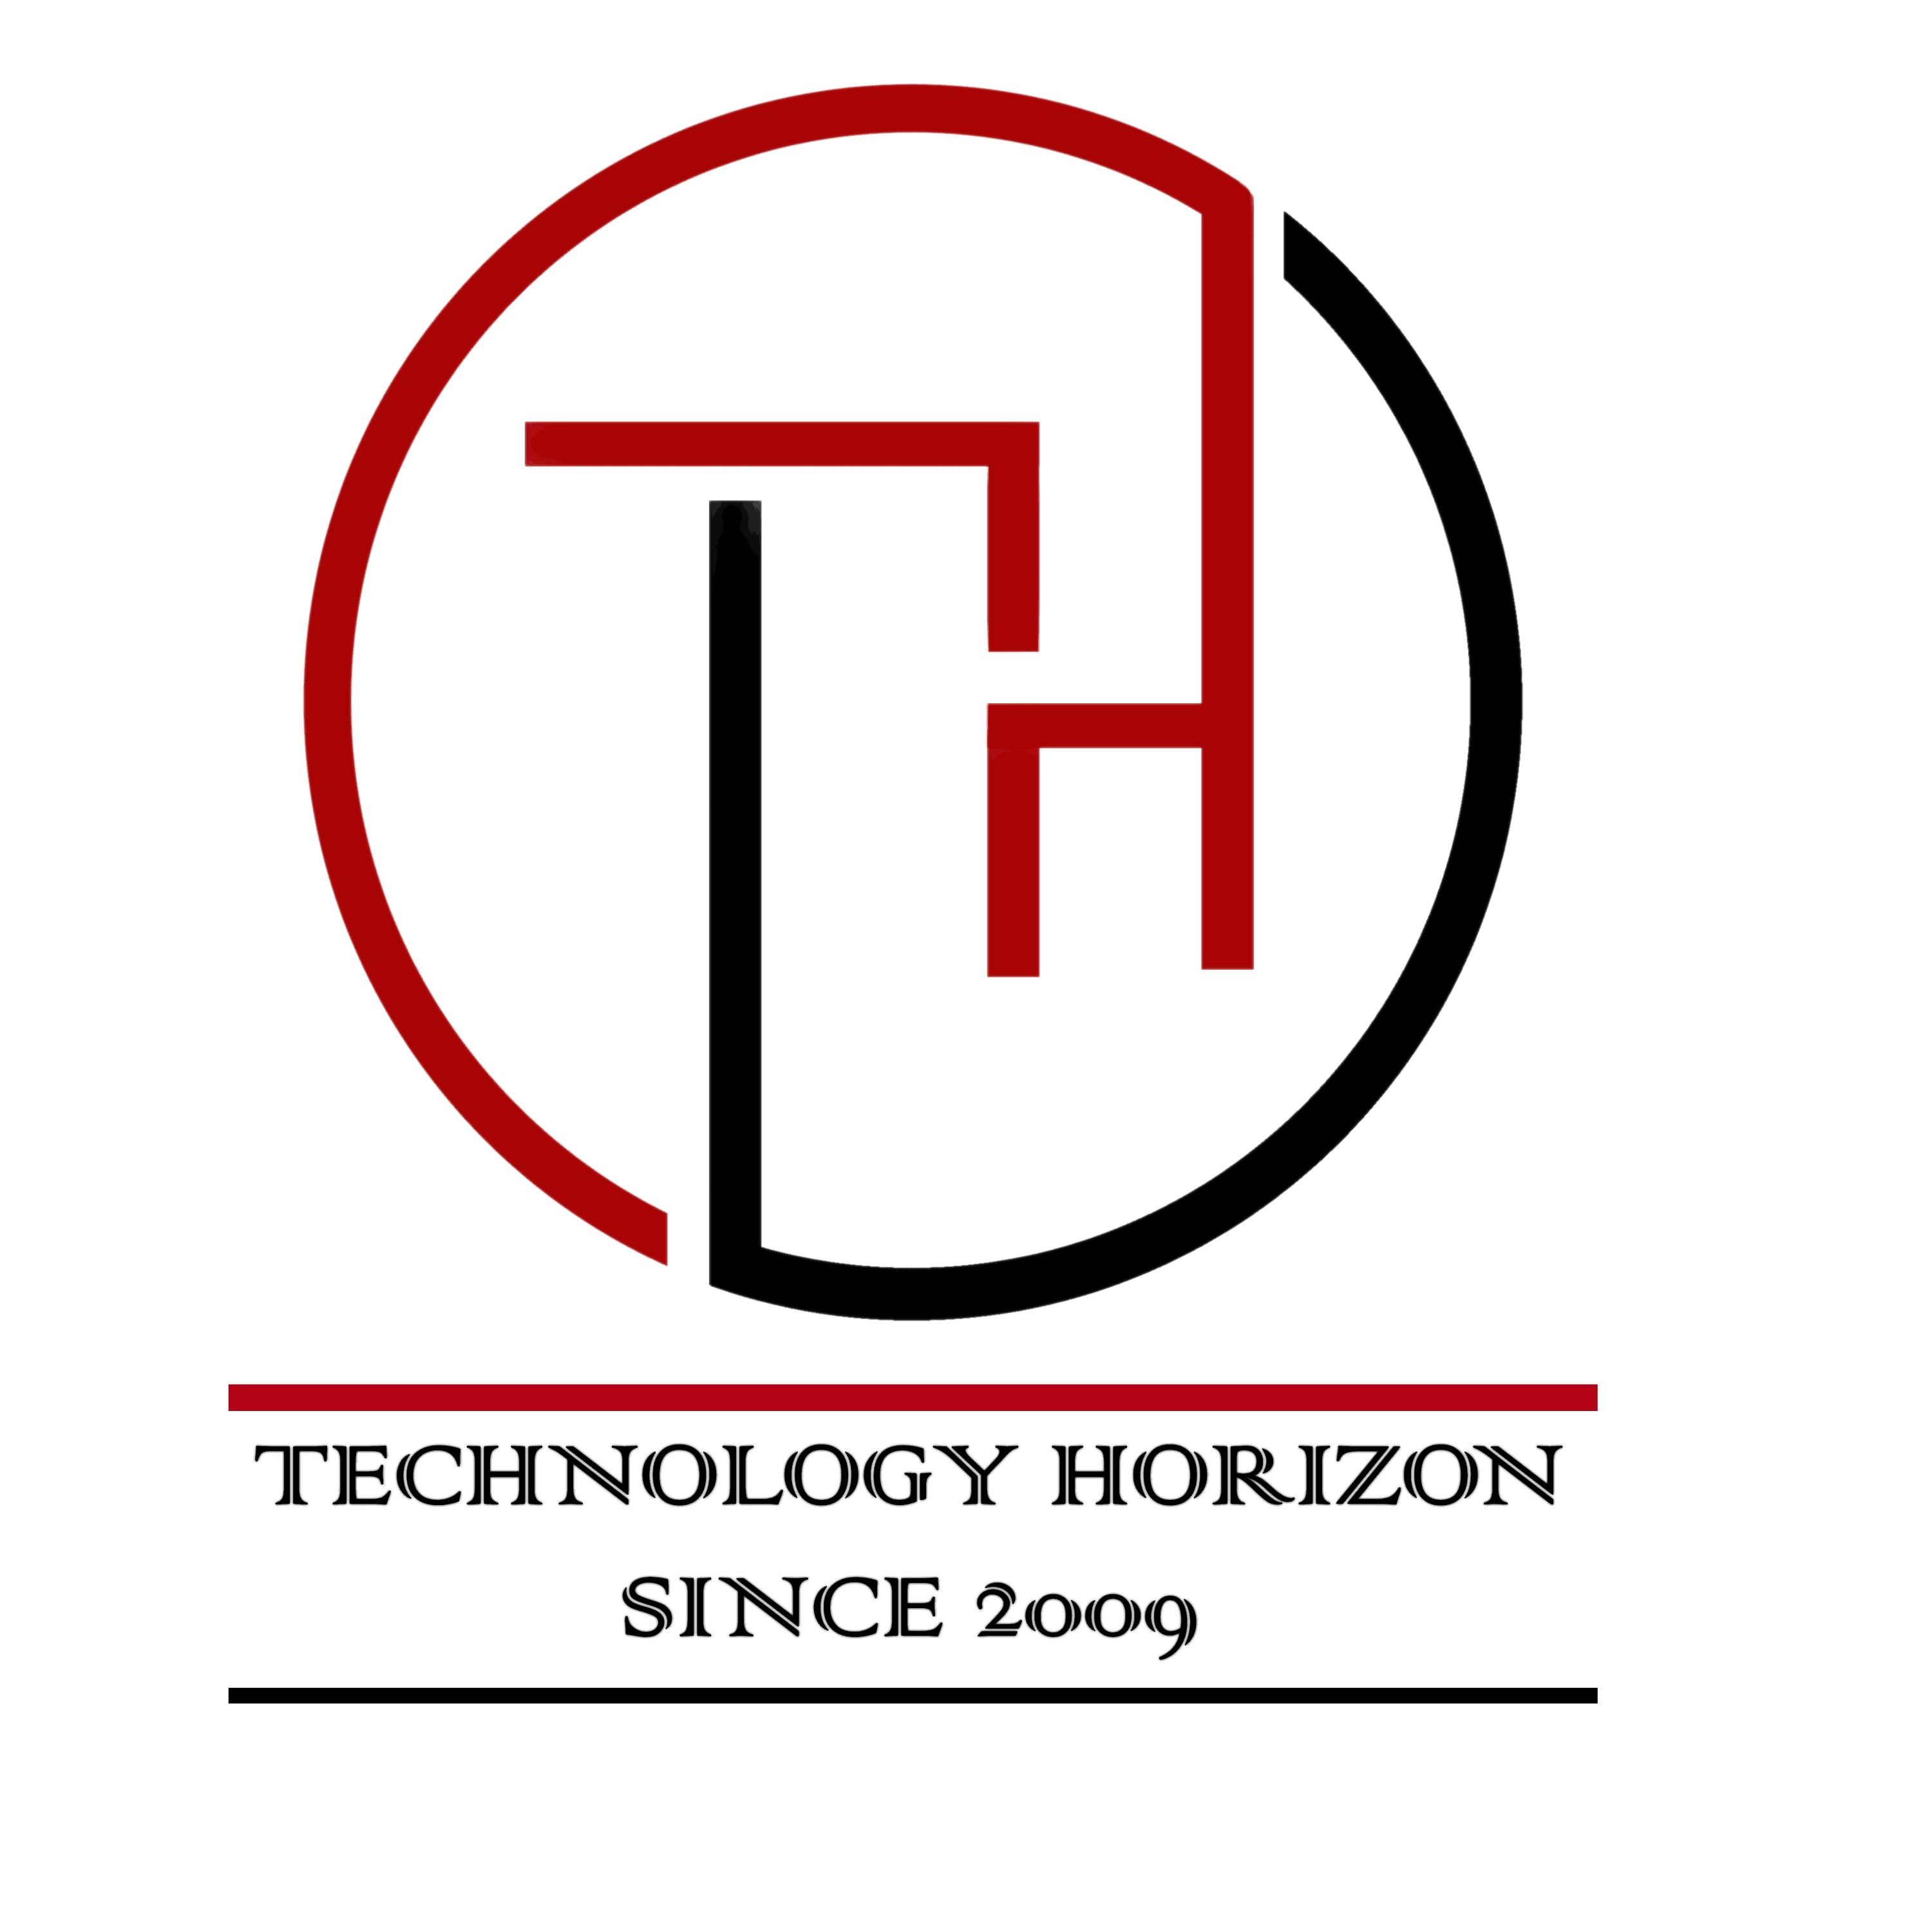 TECHNOLOGY HORIZON